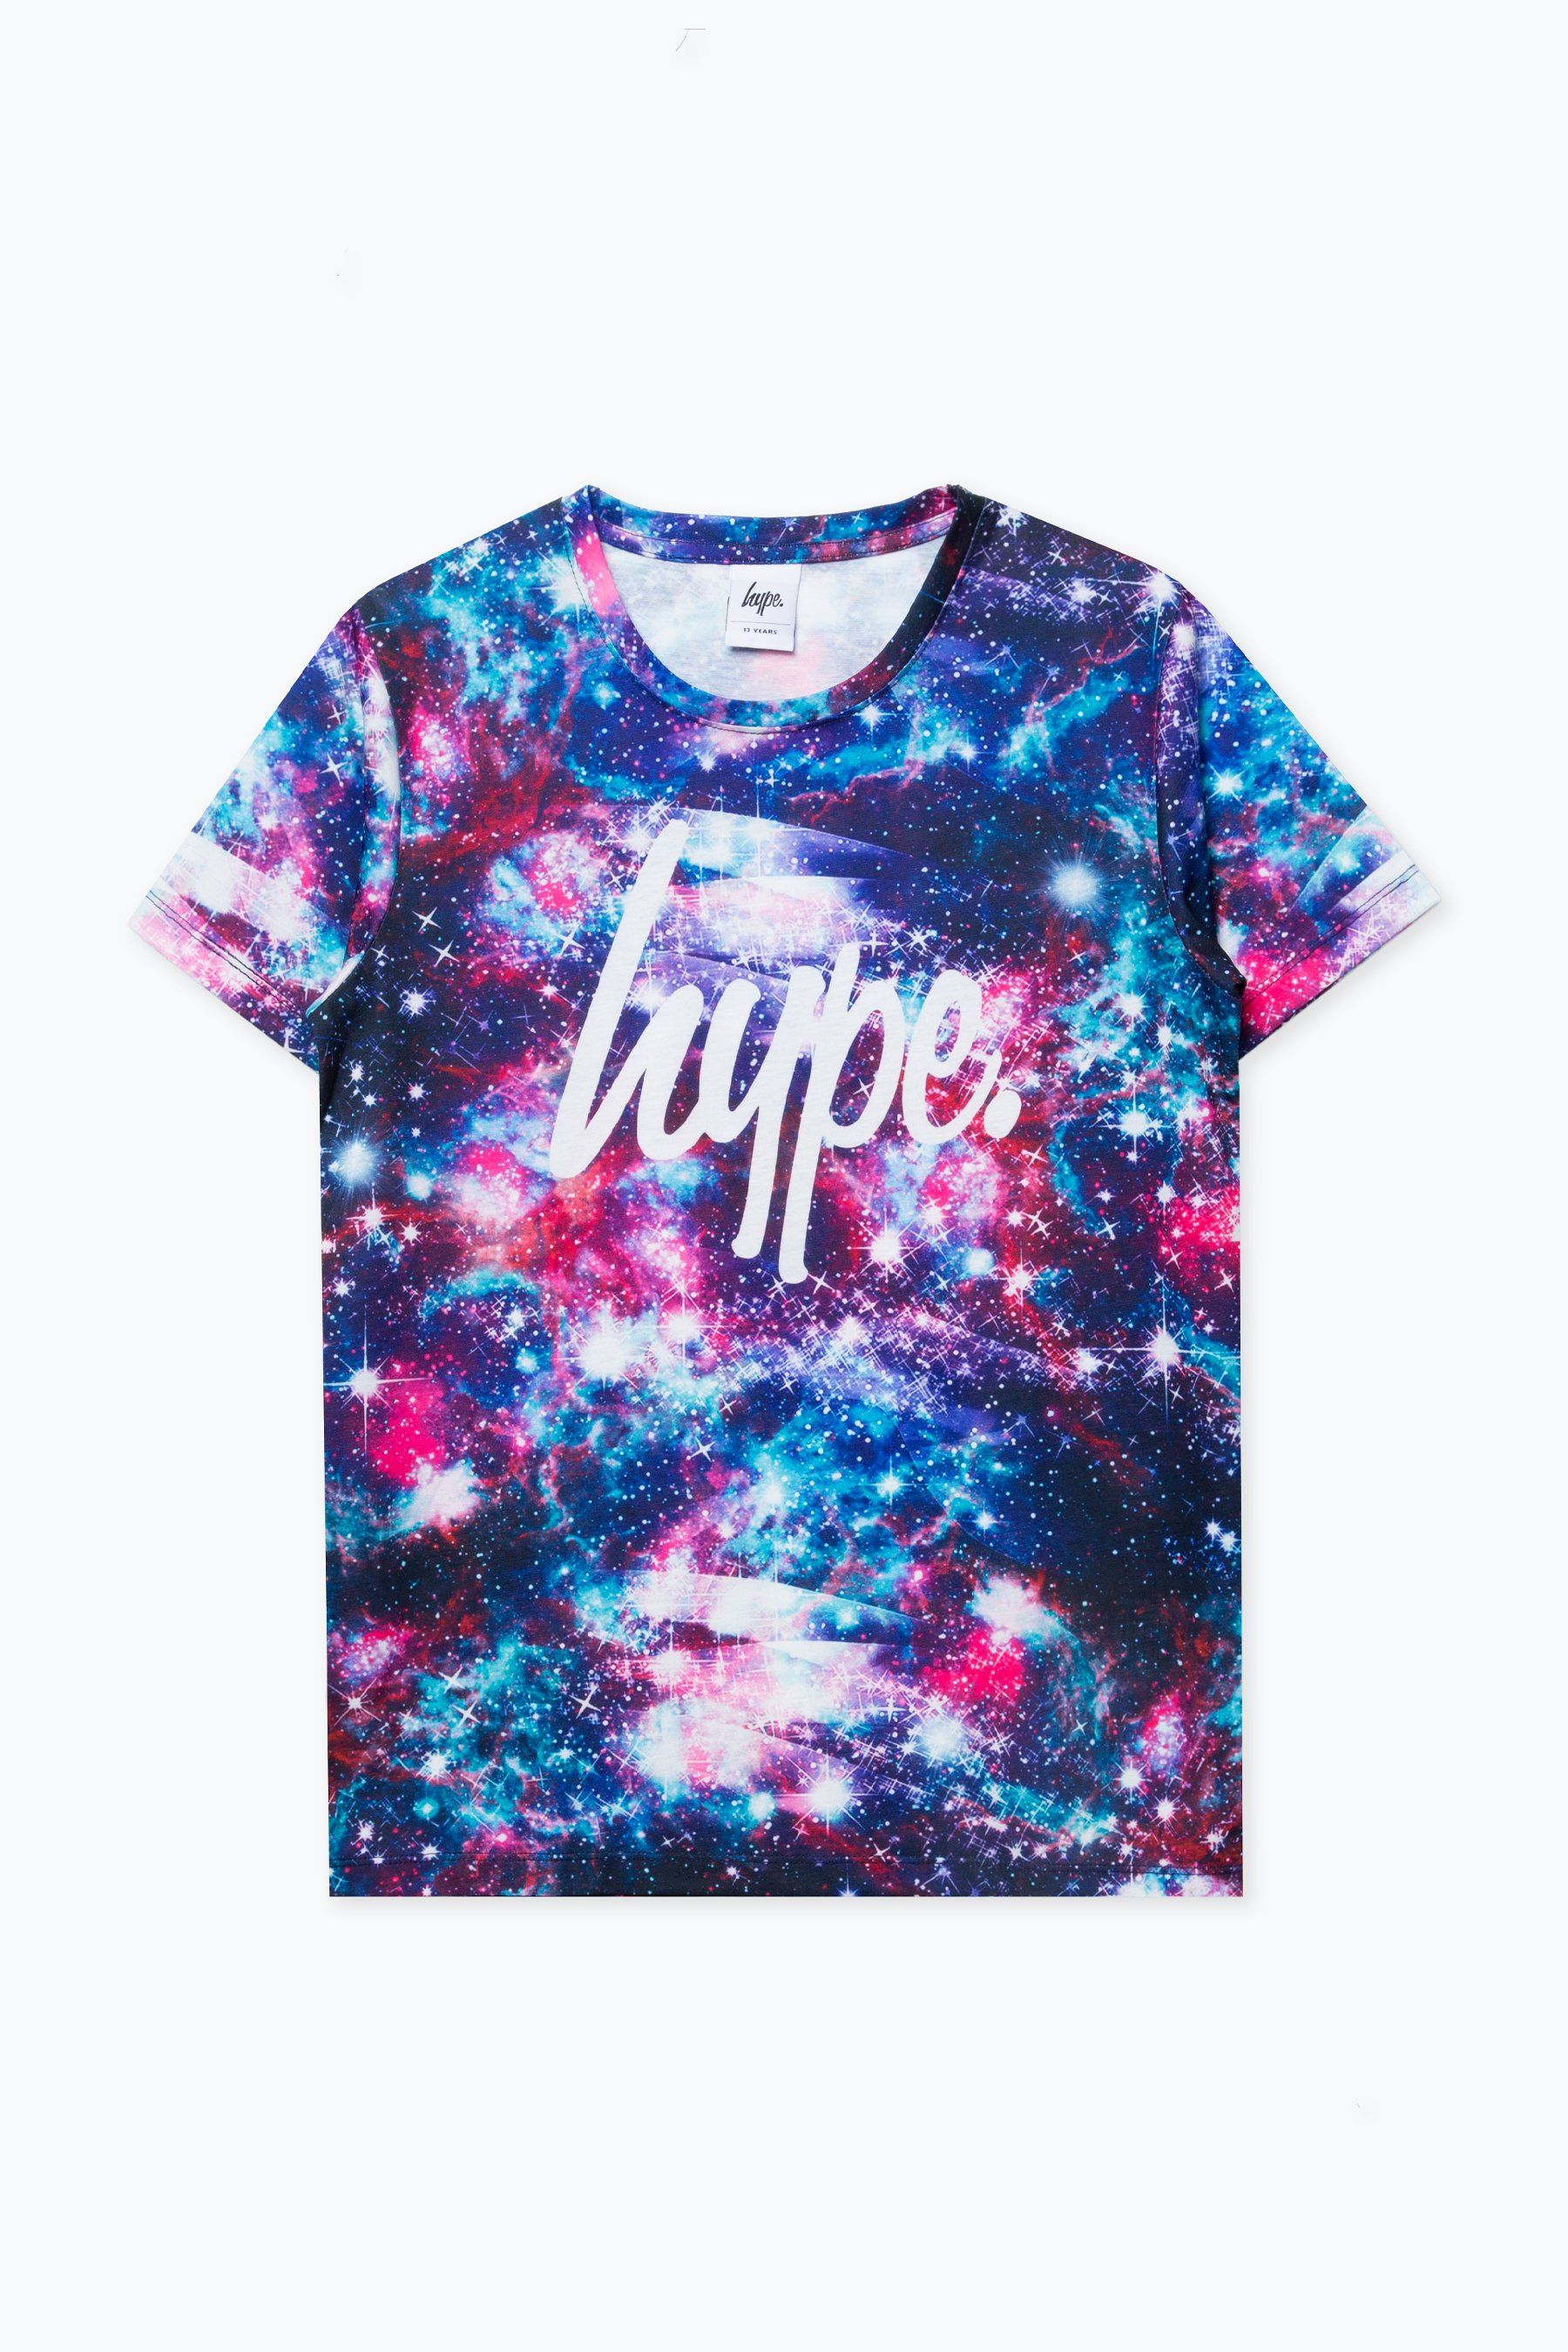 Hype Three Pack Pink/Black/Space Kids T-Shirt